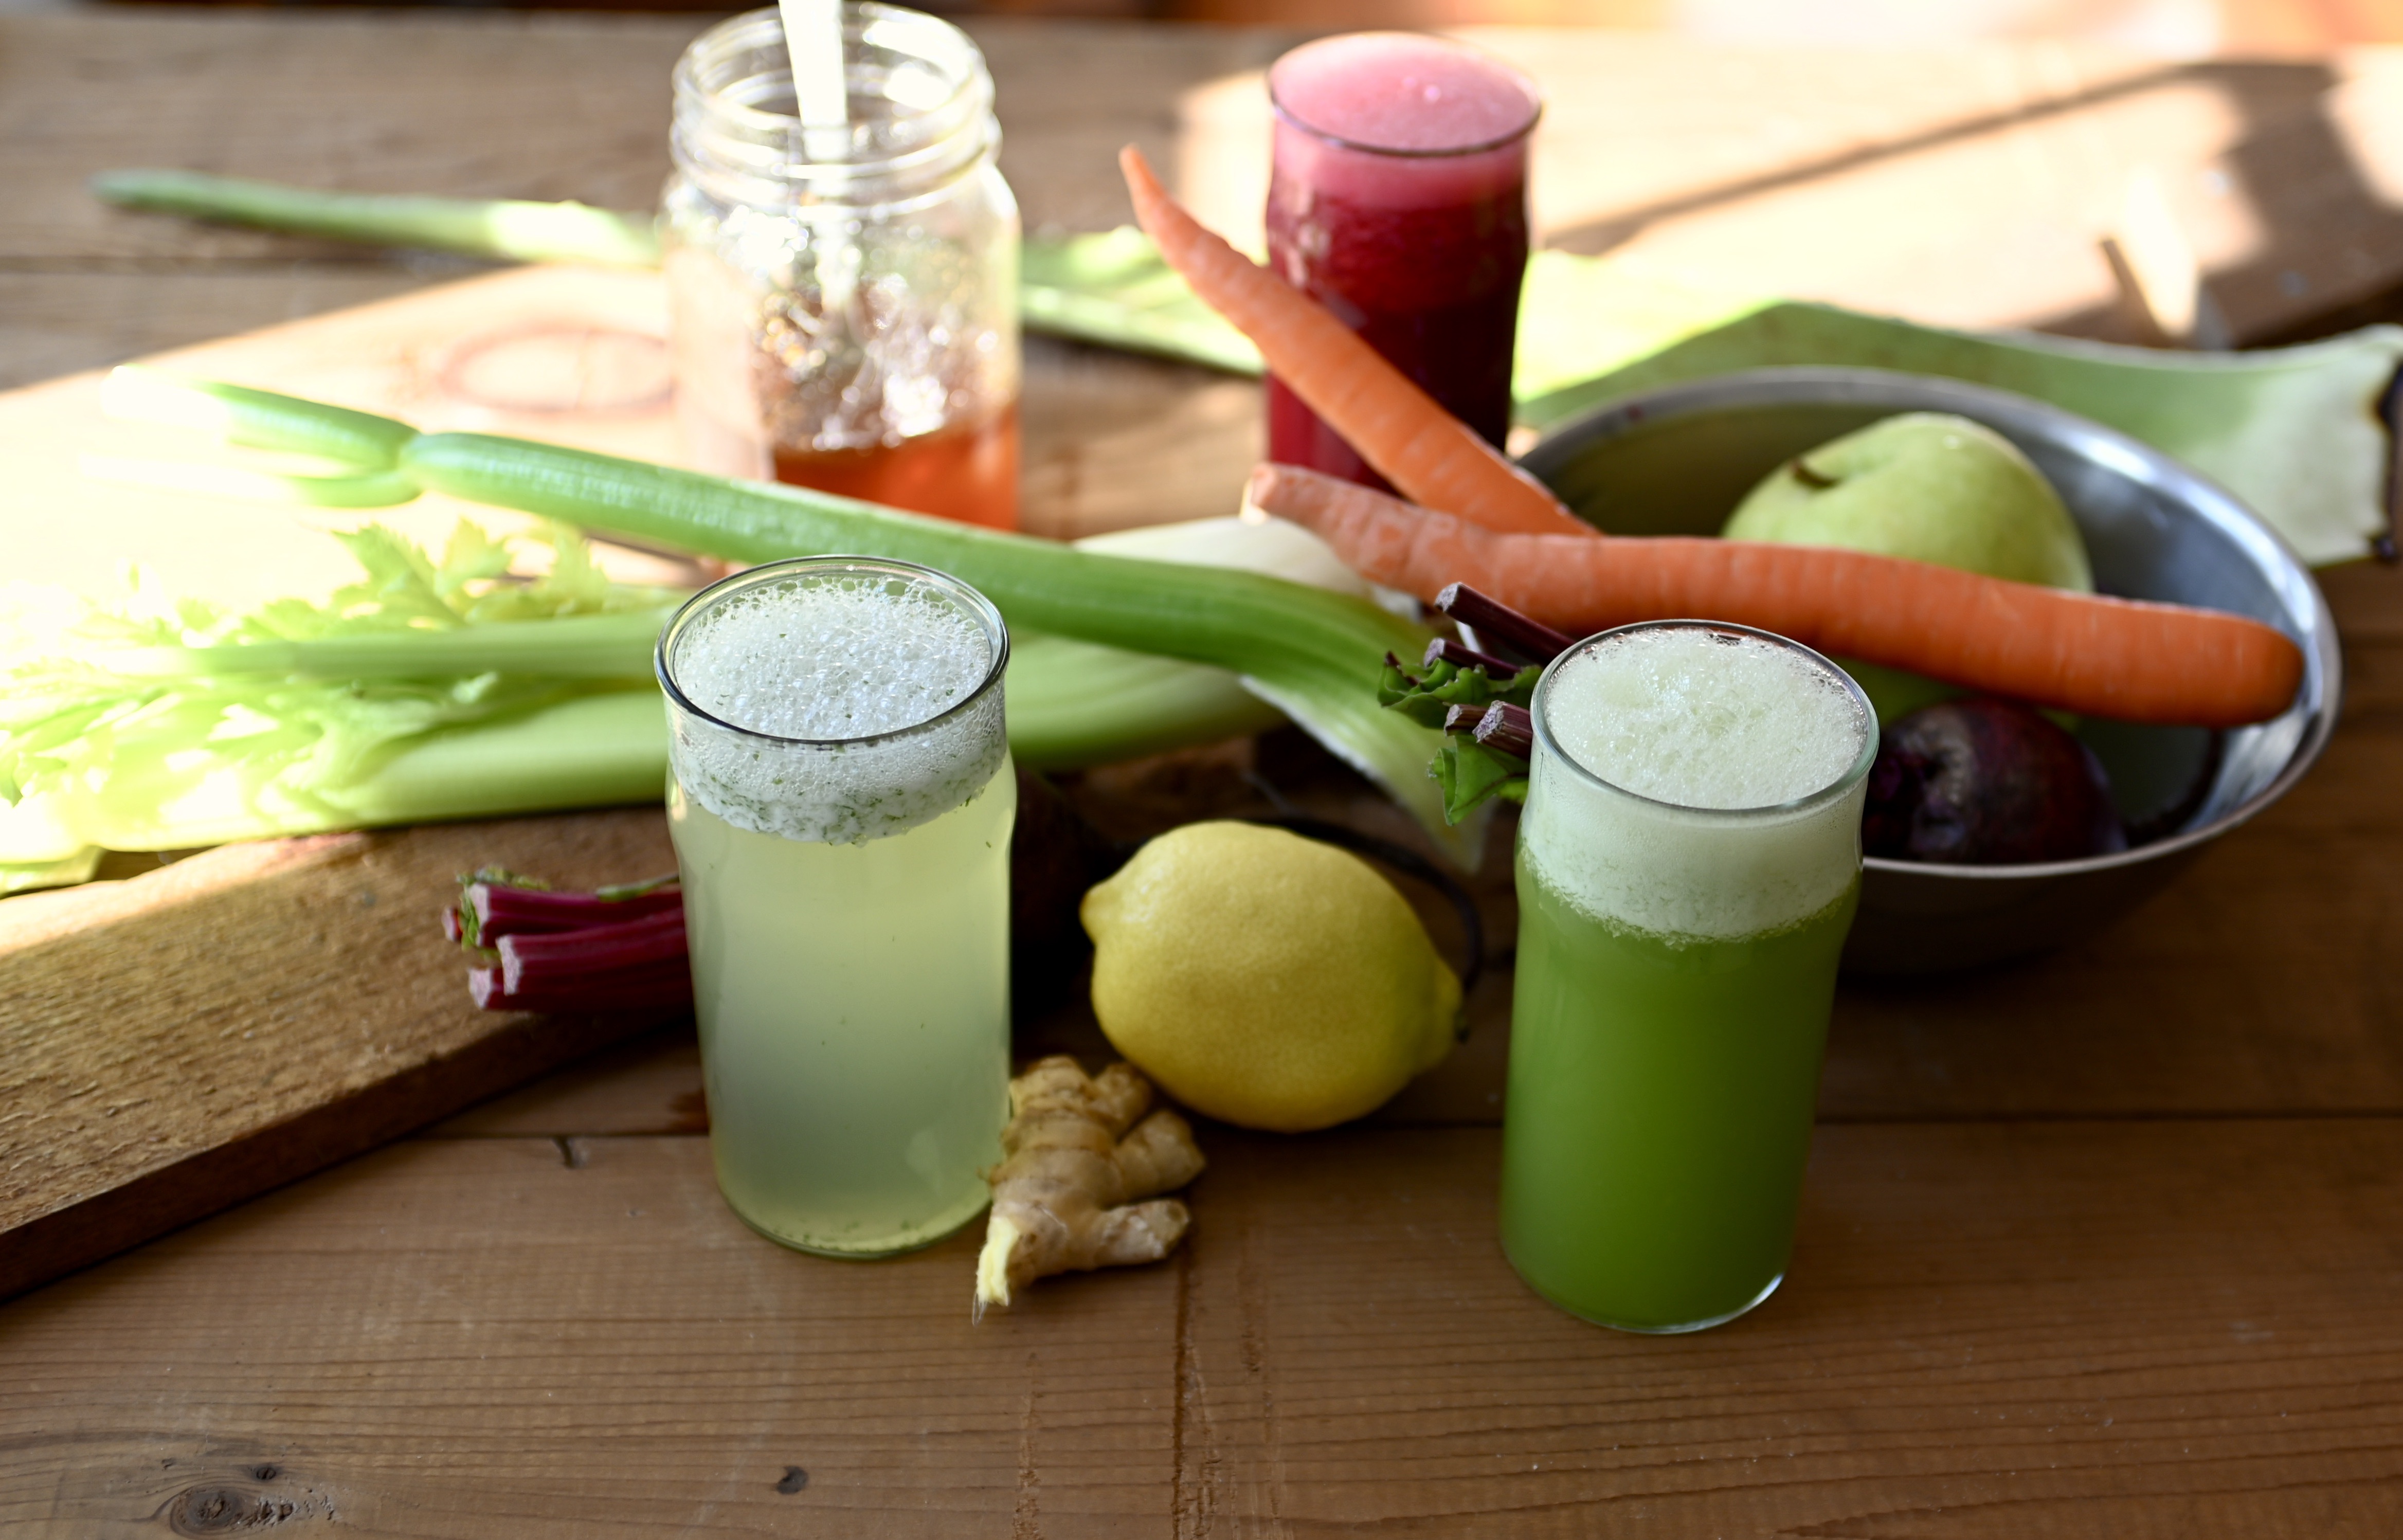  how to prepare & make aloe vera juices!